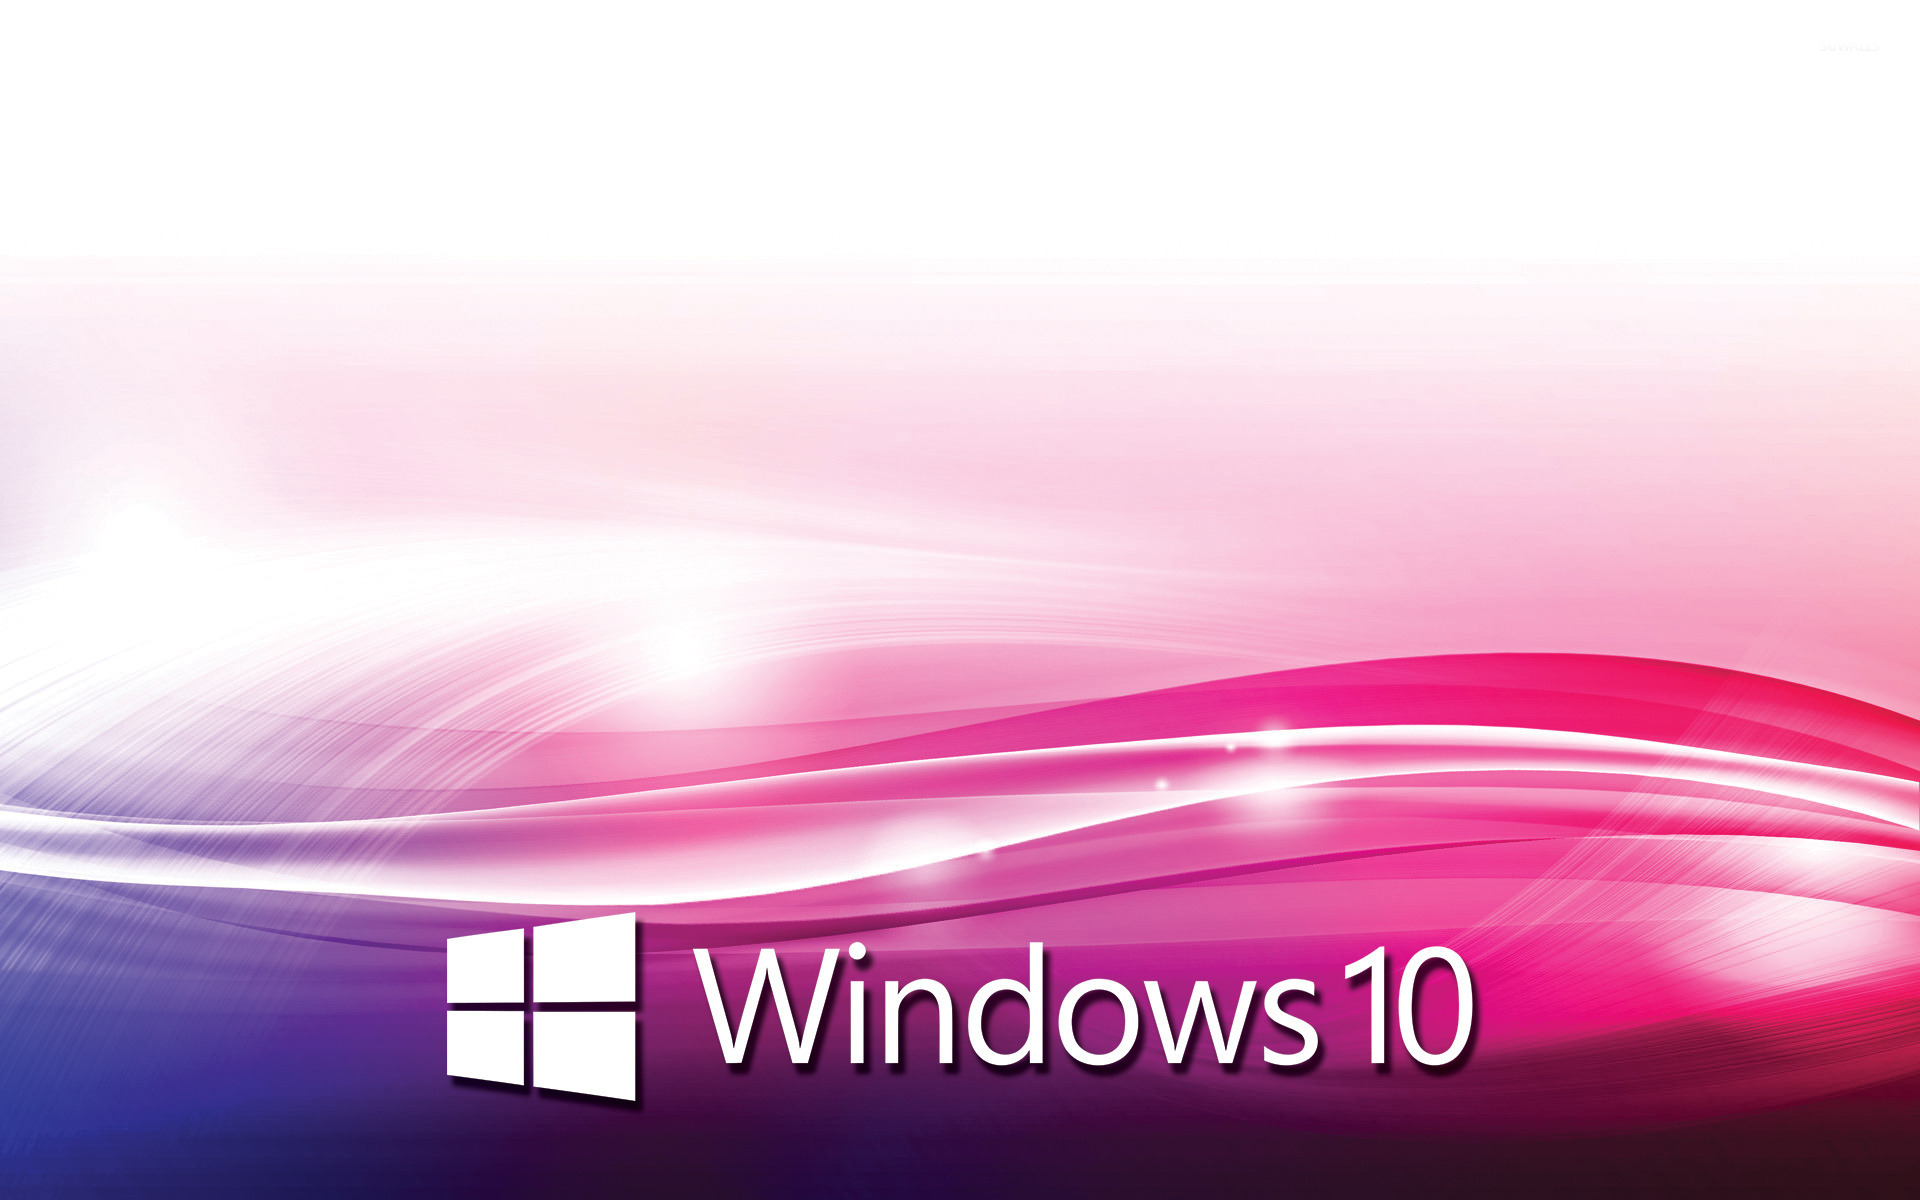 Картинки виндовс 10. Обои виндовс 10. Фон Windows 10. Картинки Windows 10. Классические обои Windows 10.